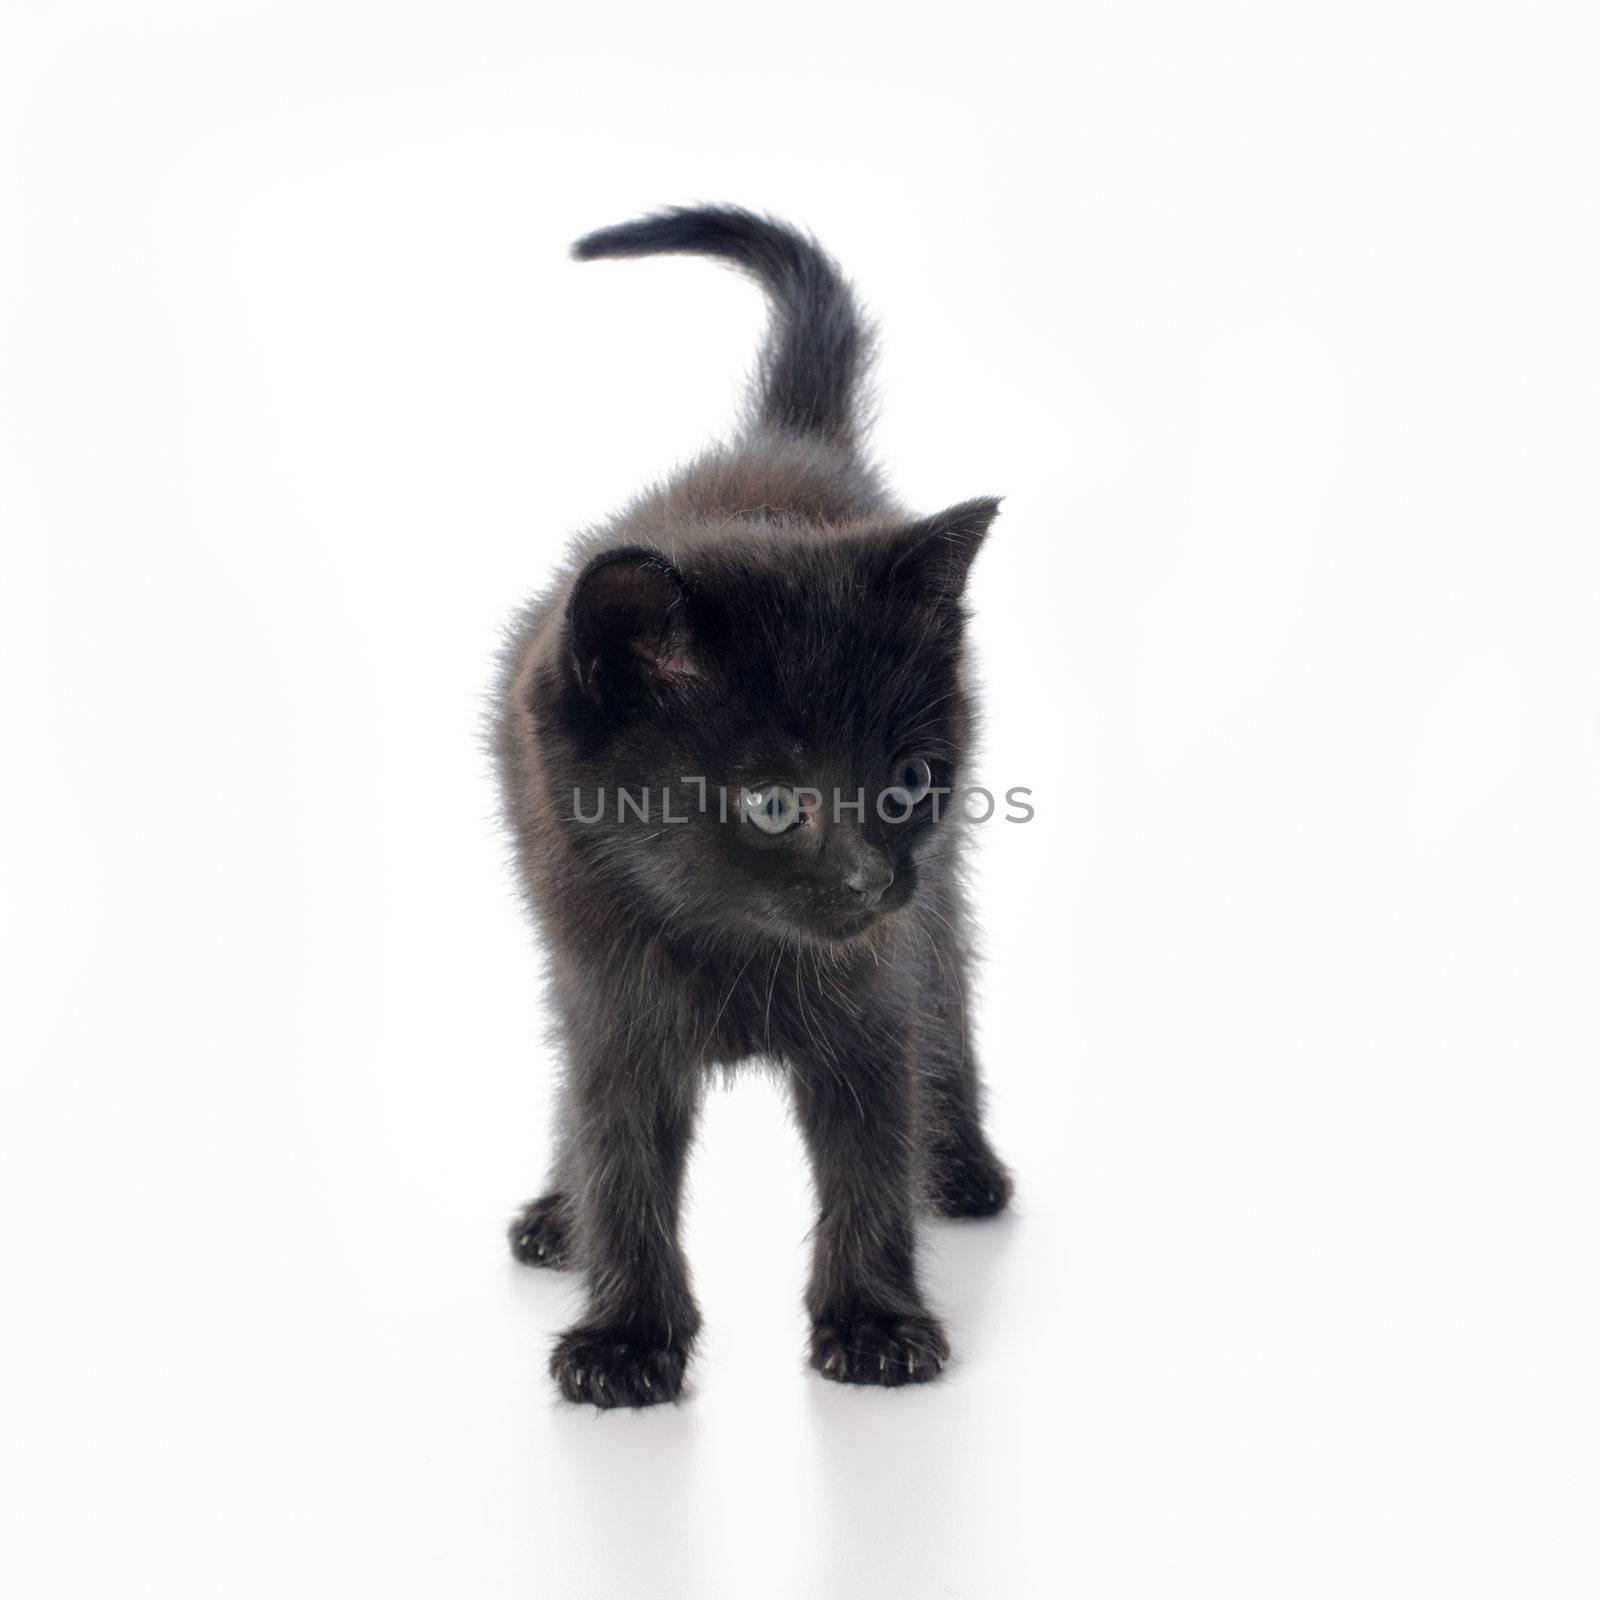 Fanny black kitten by nvelichko